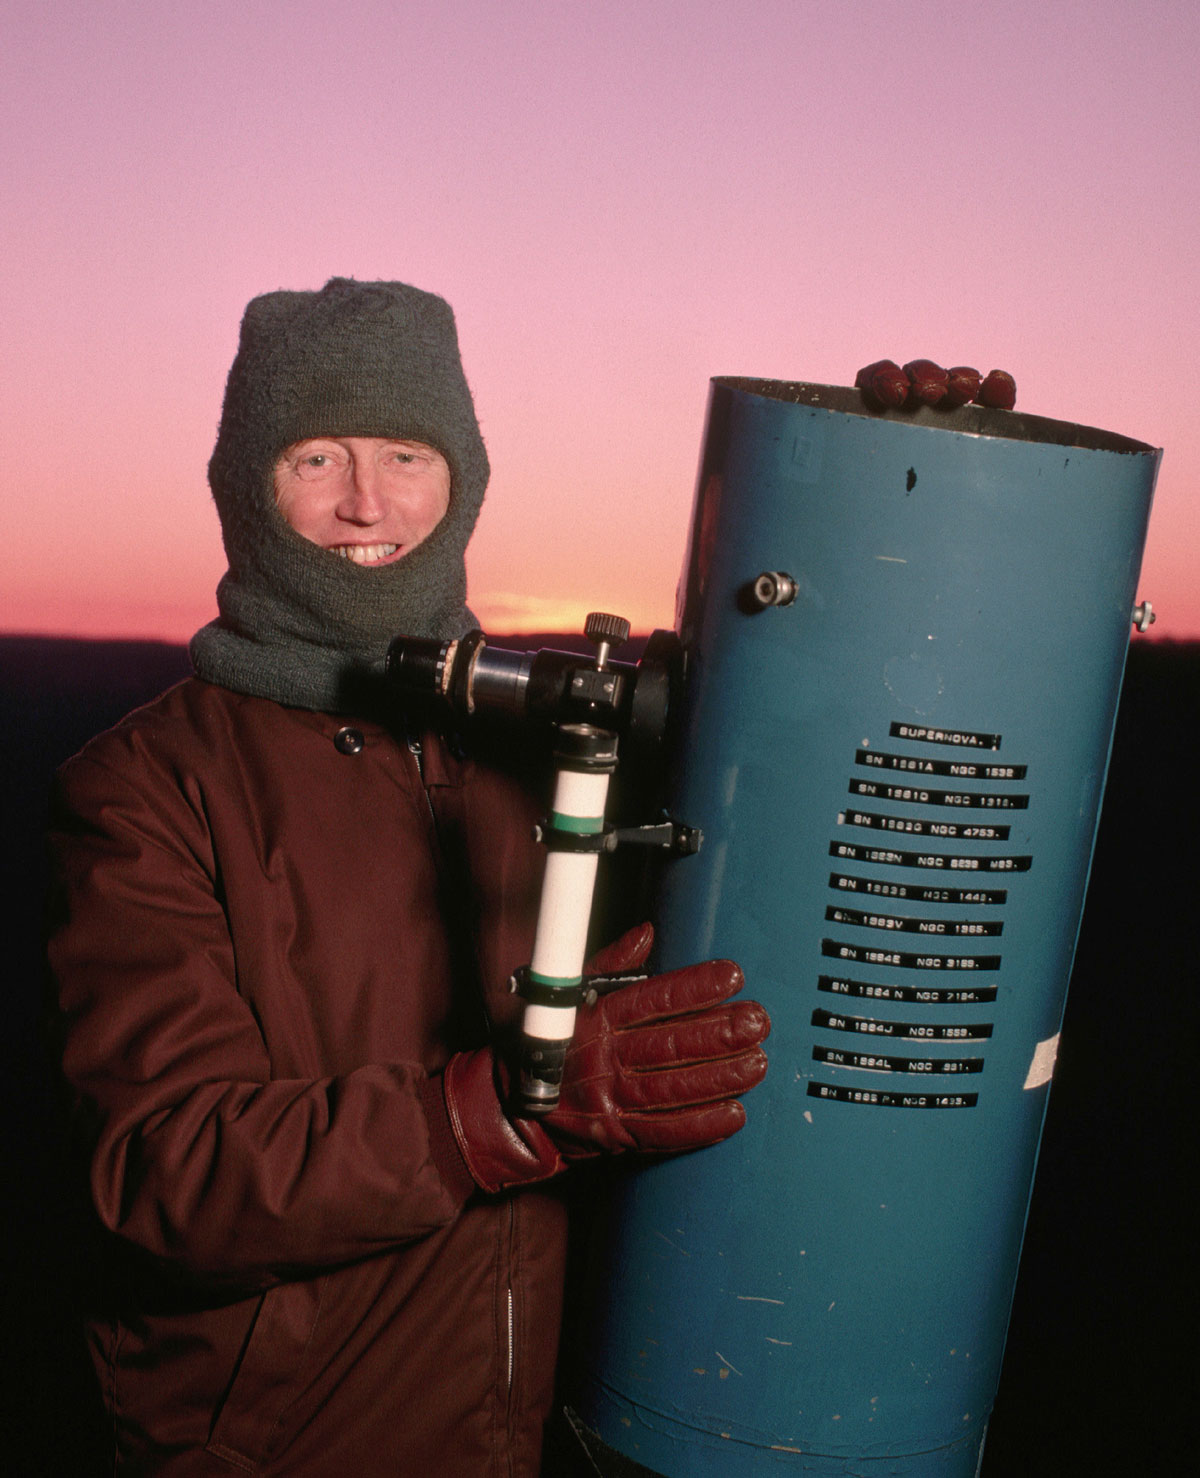 Circa 1988 photograph of Robert Evans with his telescope.